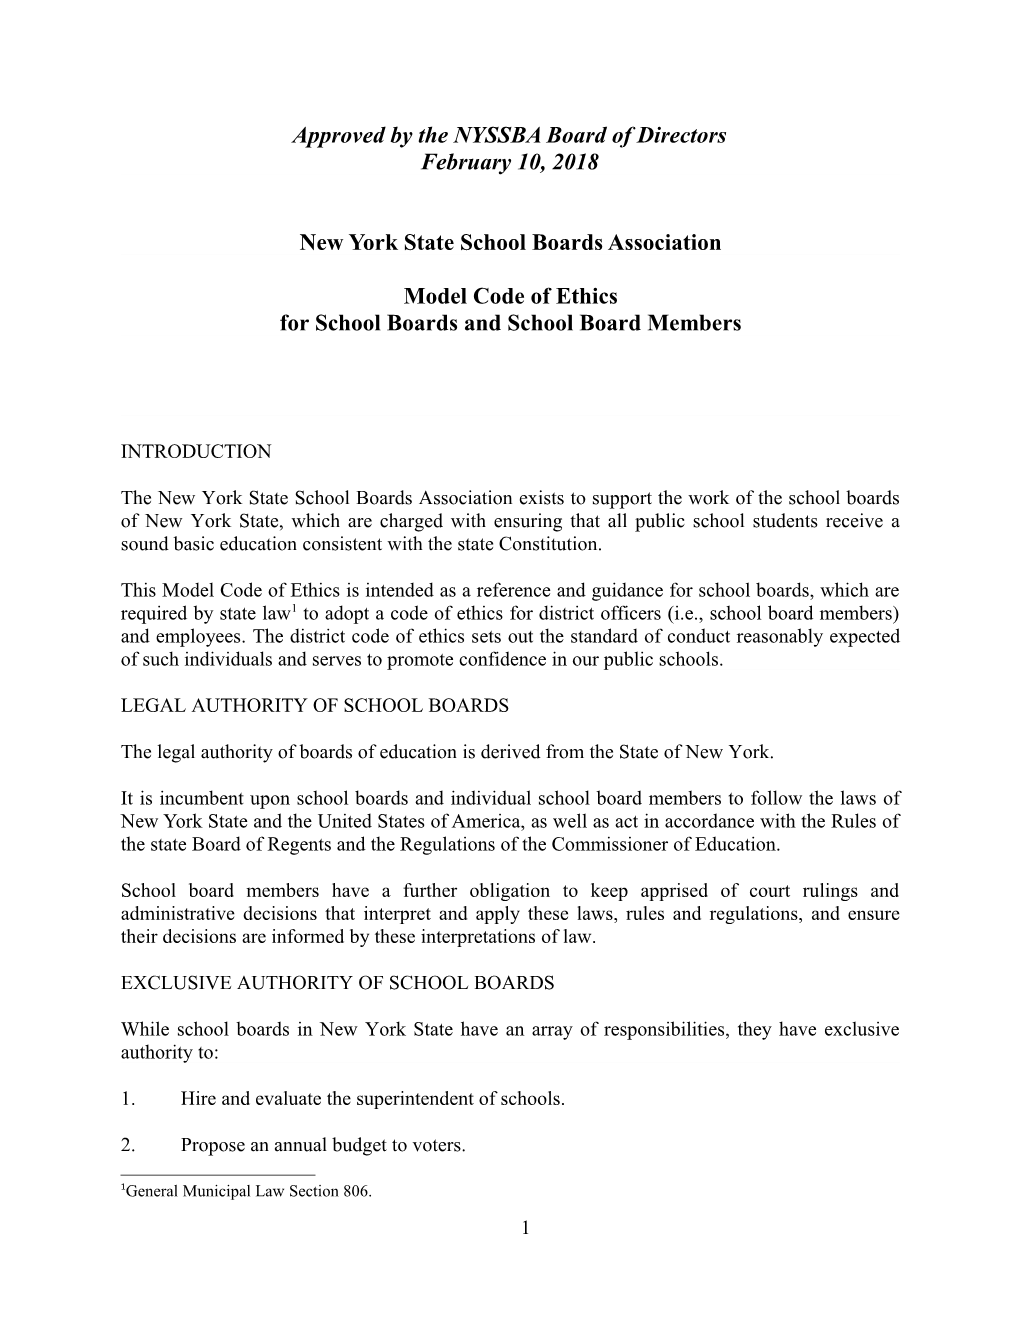 New York State School Boards Association